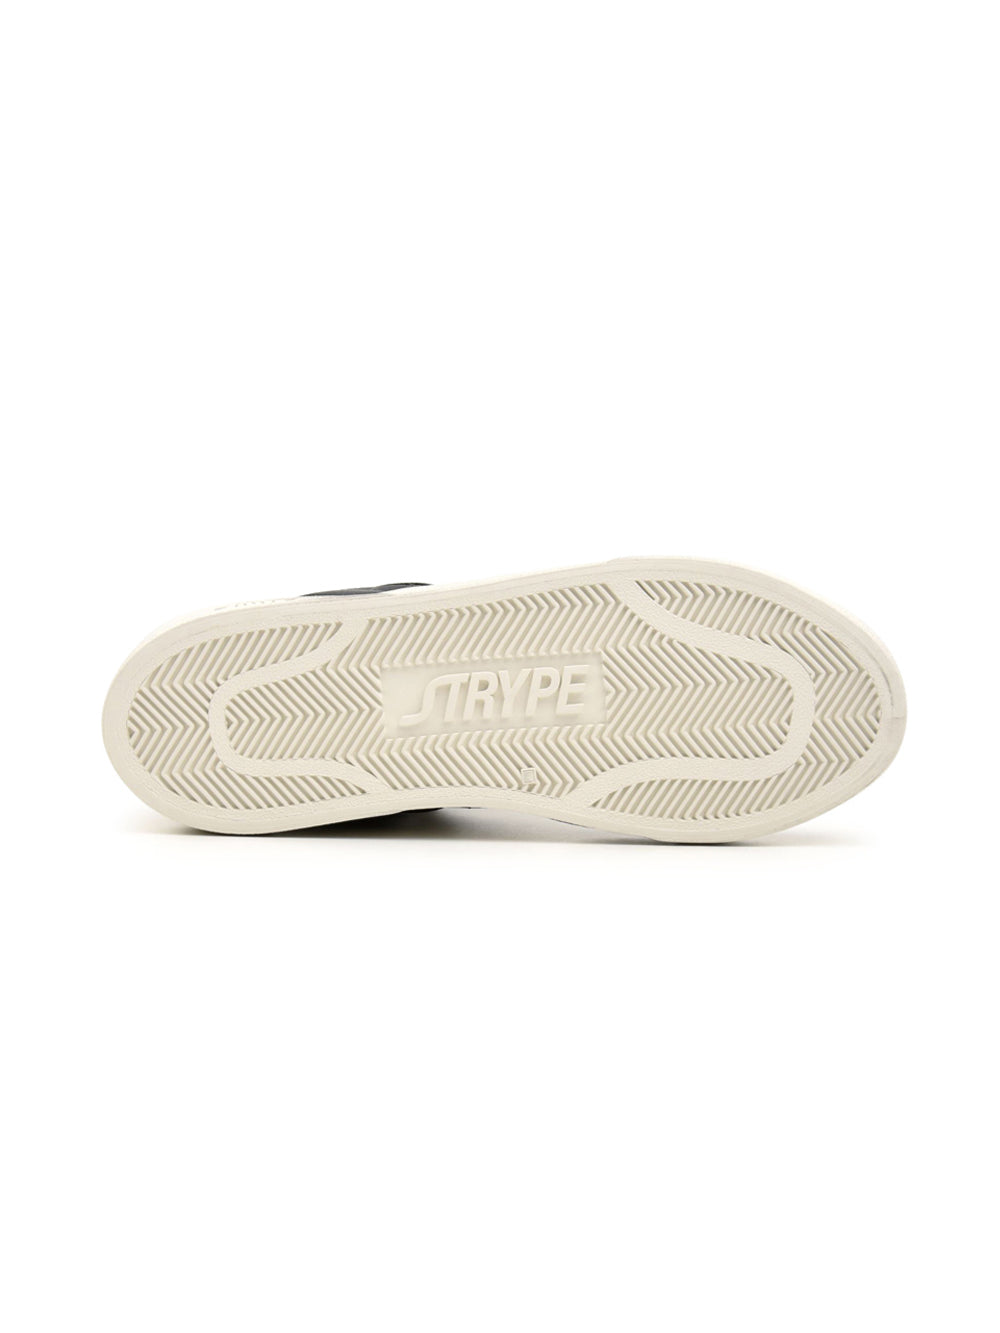 Sneakers Basse STRYPE Uomo ST3001 Nero